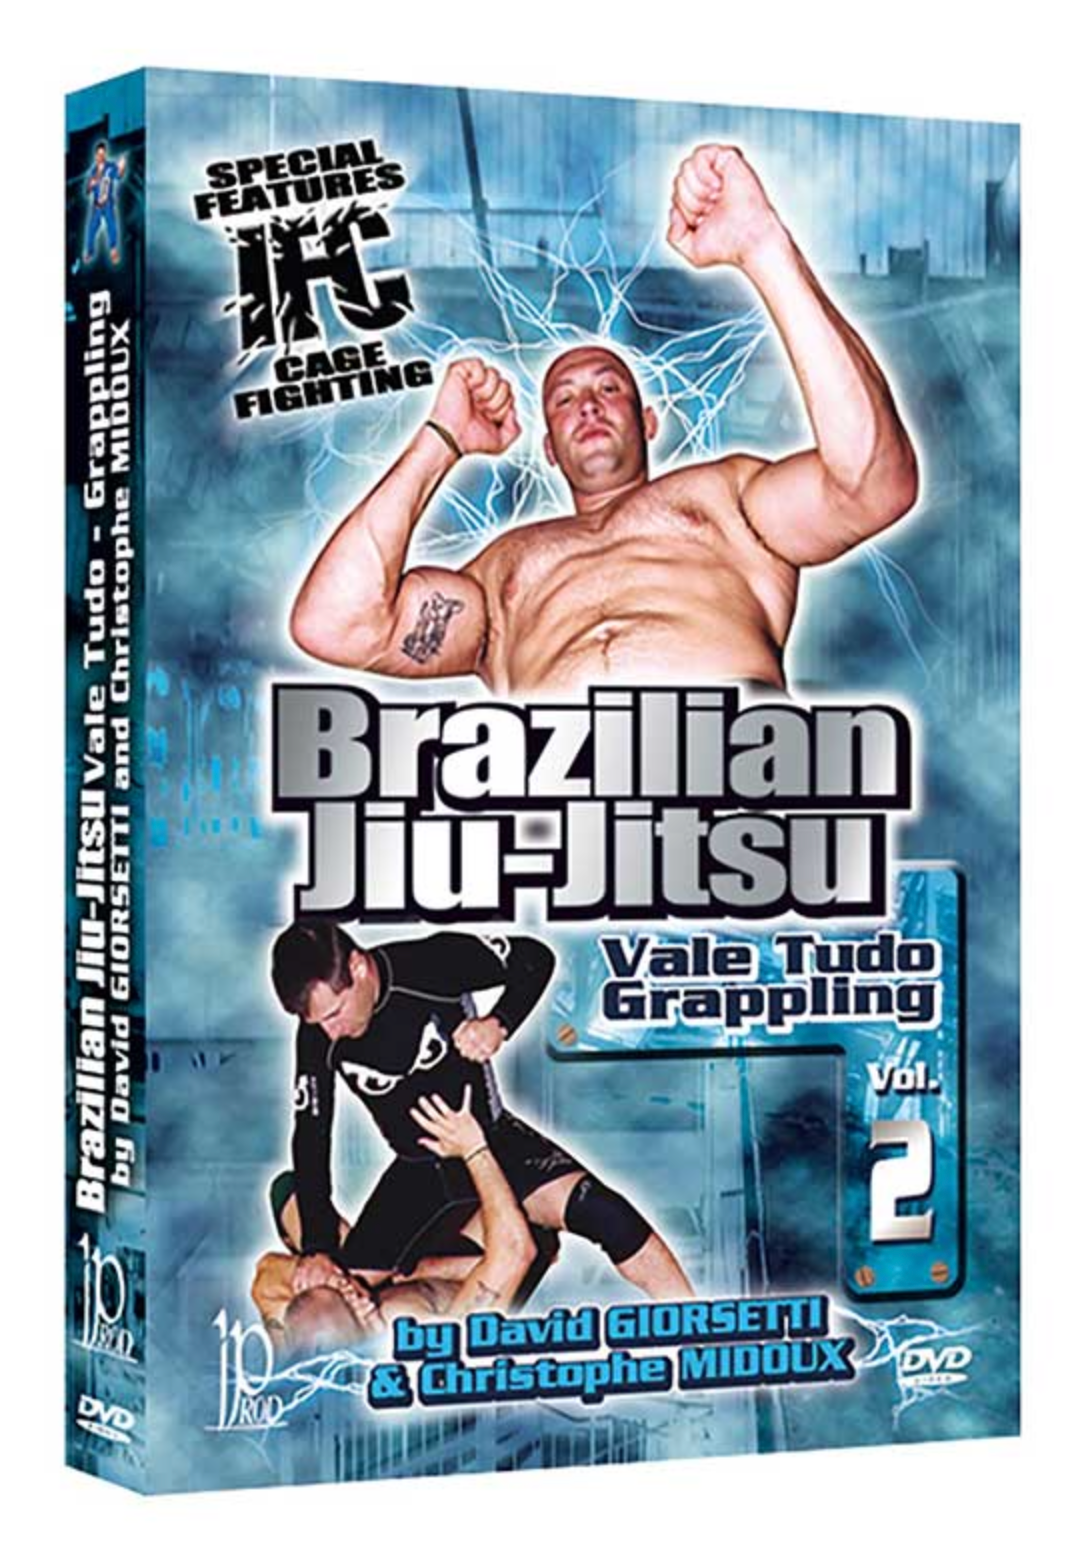 Jiu-Jitsu brasileño Vale Tudo Grappling DVD 2 de David Giorsetti y Christophe Midoux